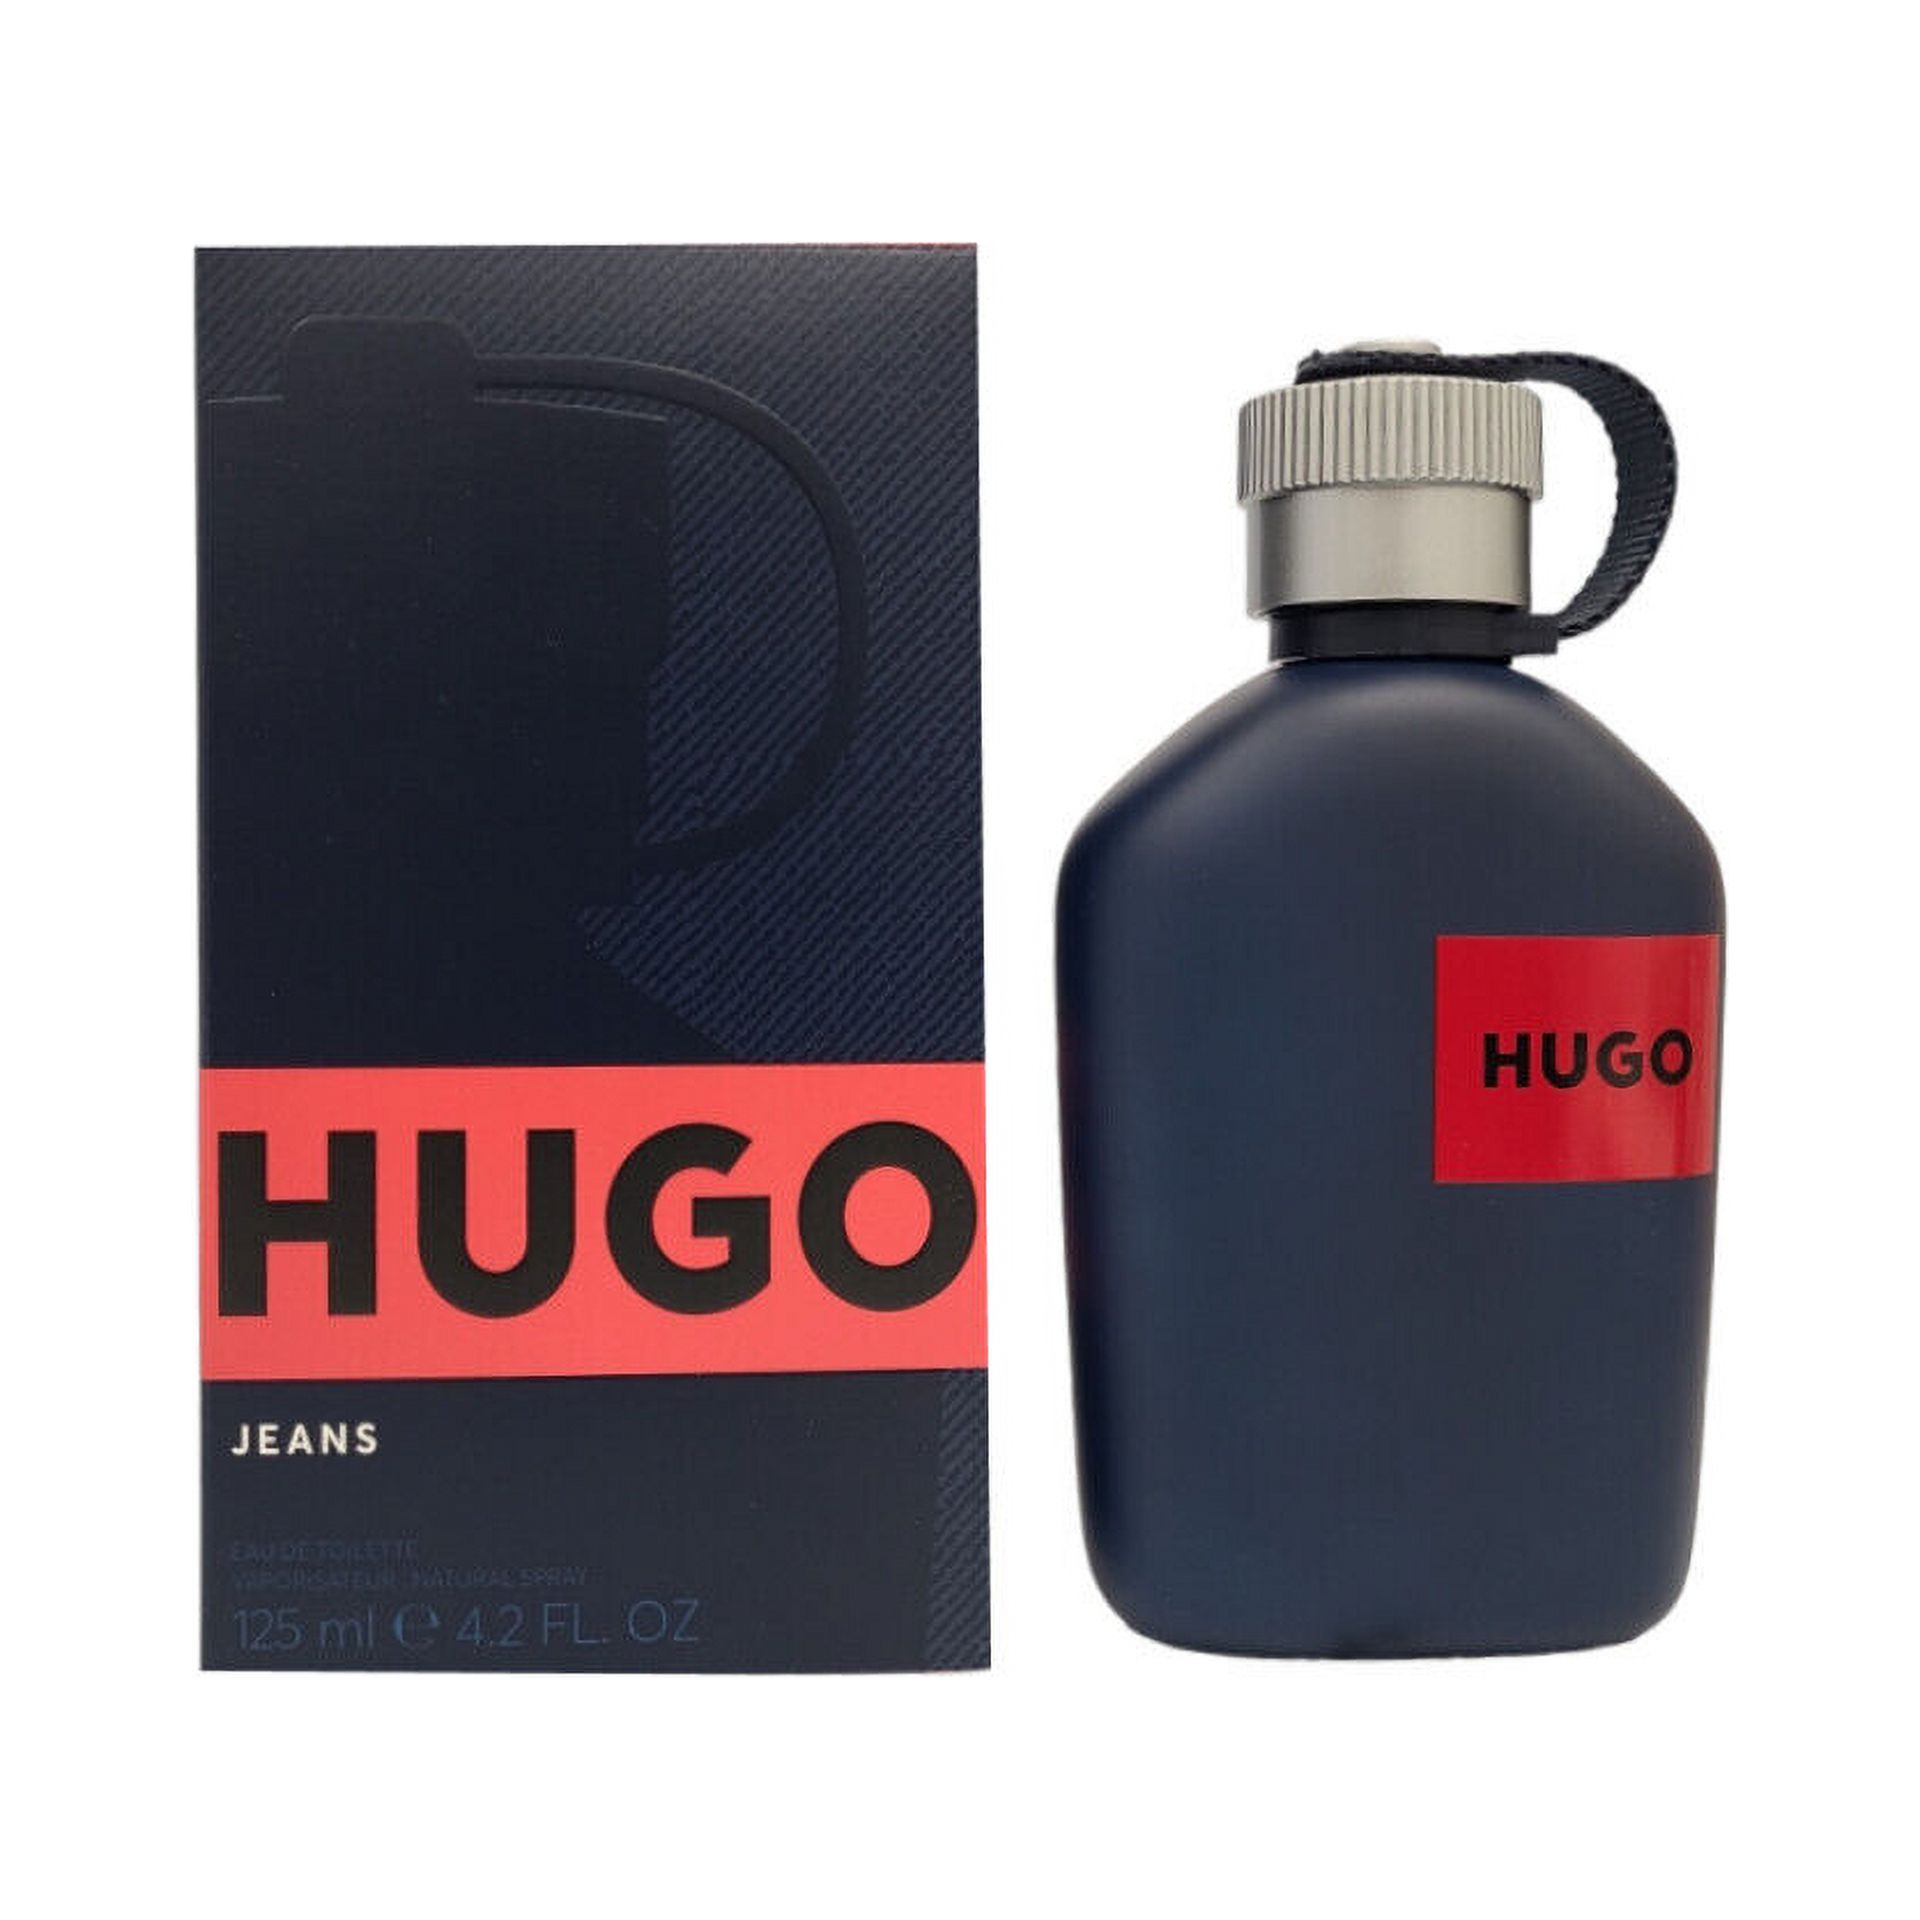 Hugo Jeans by Hugo Boss Eau De Toilette Spray 4.2 oz for Men - image 2 of 4